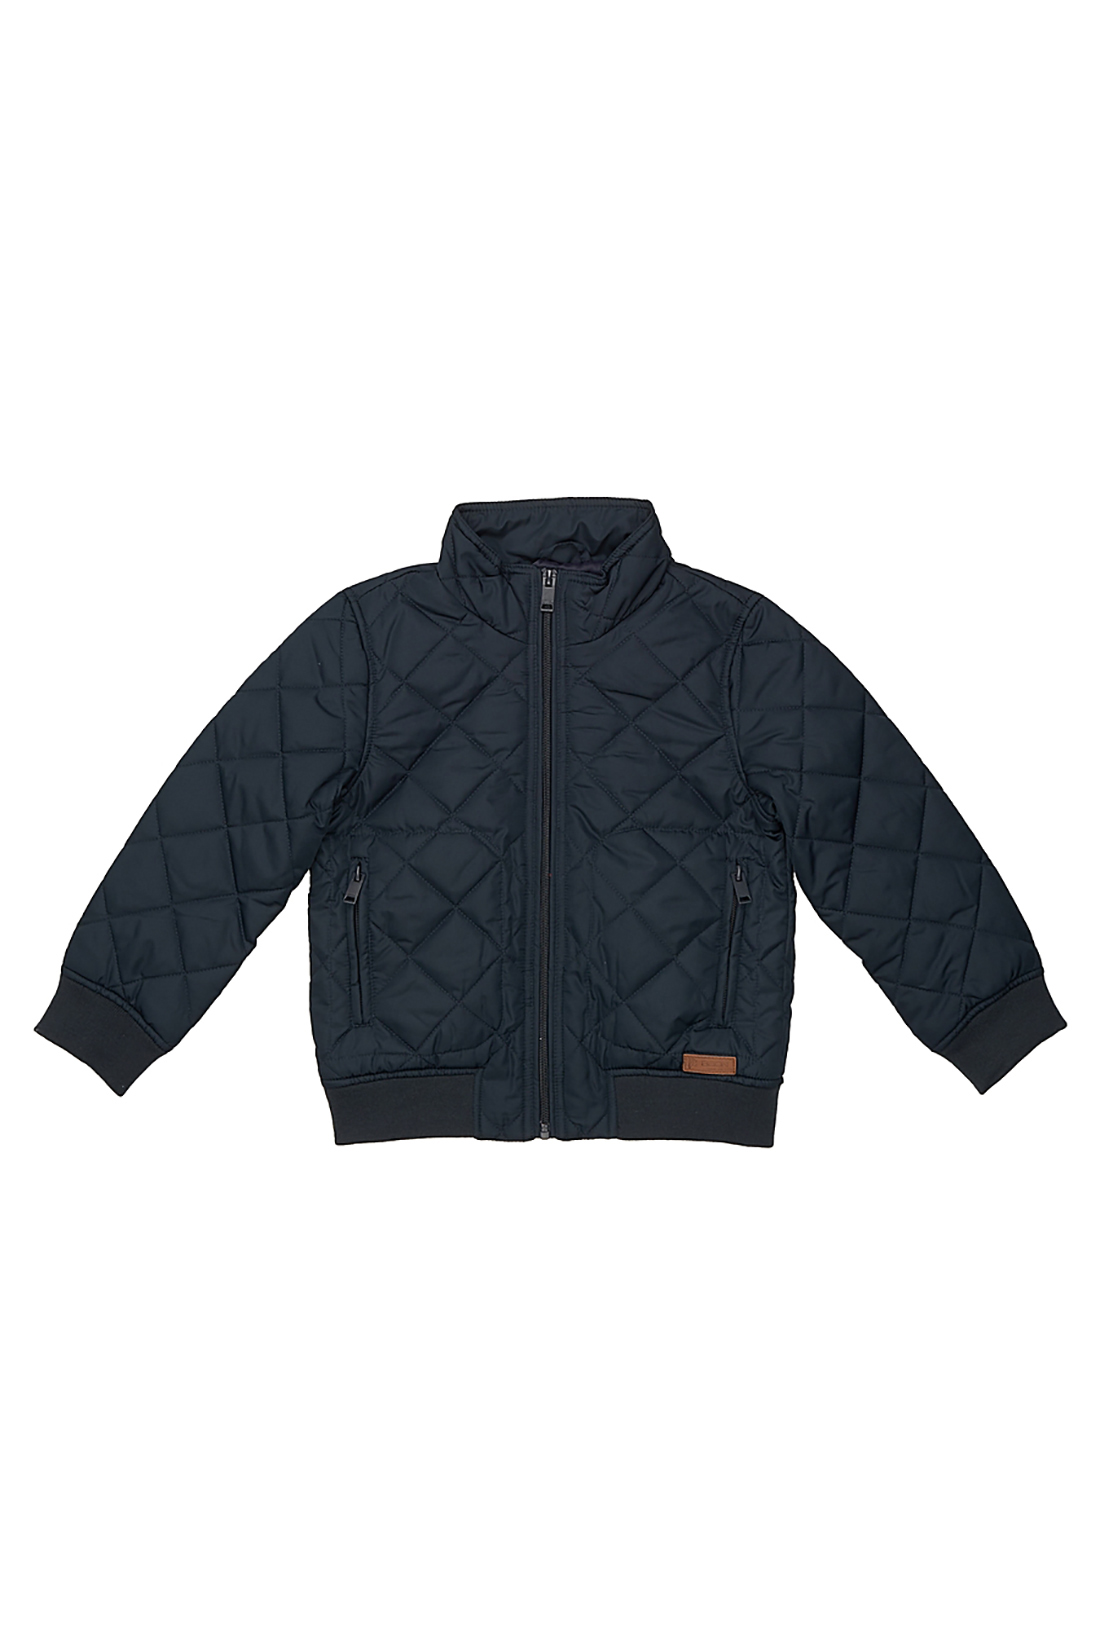 Куртка для мальчика (арт. baon BK538005), размер 98-104, цвет синий Куртка для мальчика (арт. baon BK538005) - фото 4